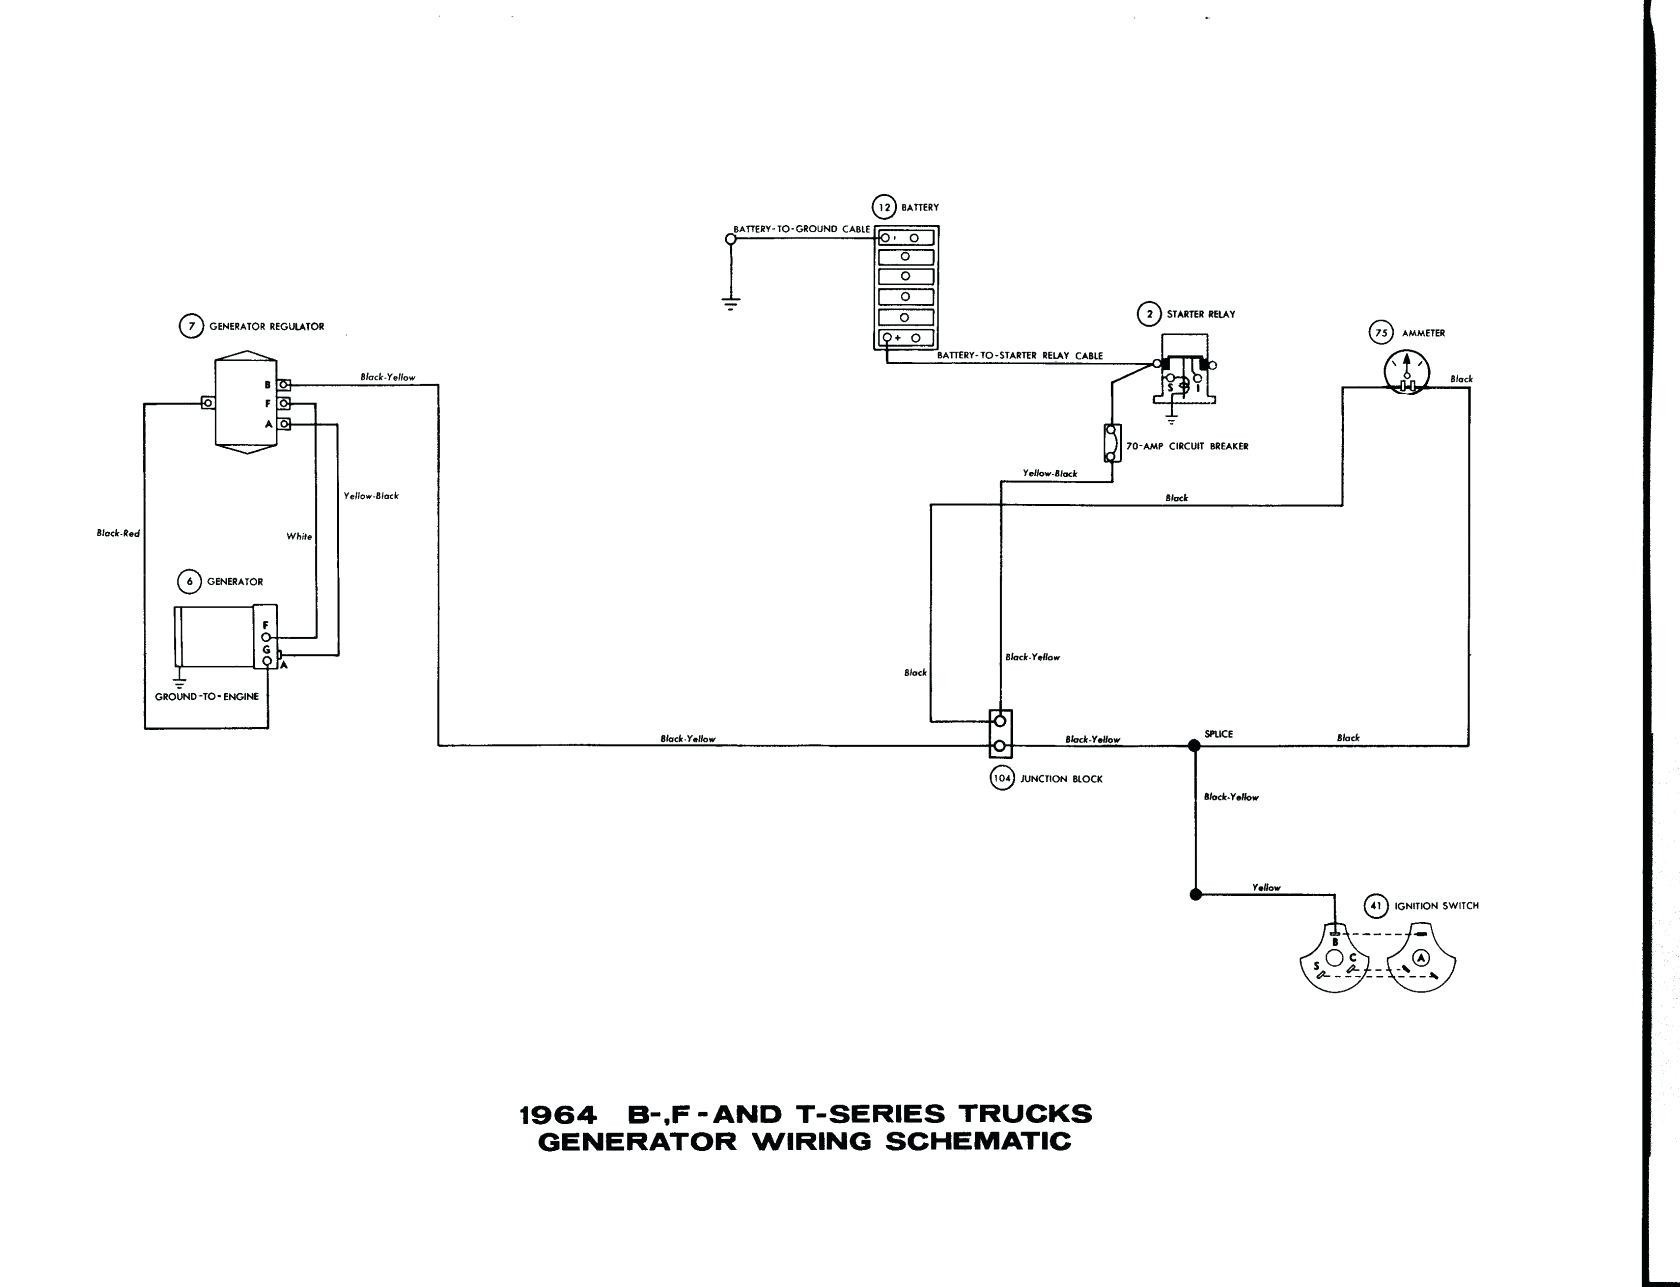 Ac Delco Alternator Wiring Diagram Wiring Diagram for Ac Delco Alternator New Wiring Diagram Alternator Of Ac Delco Alternator Wiring Diagram